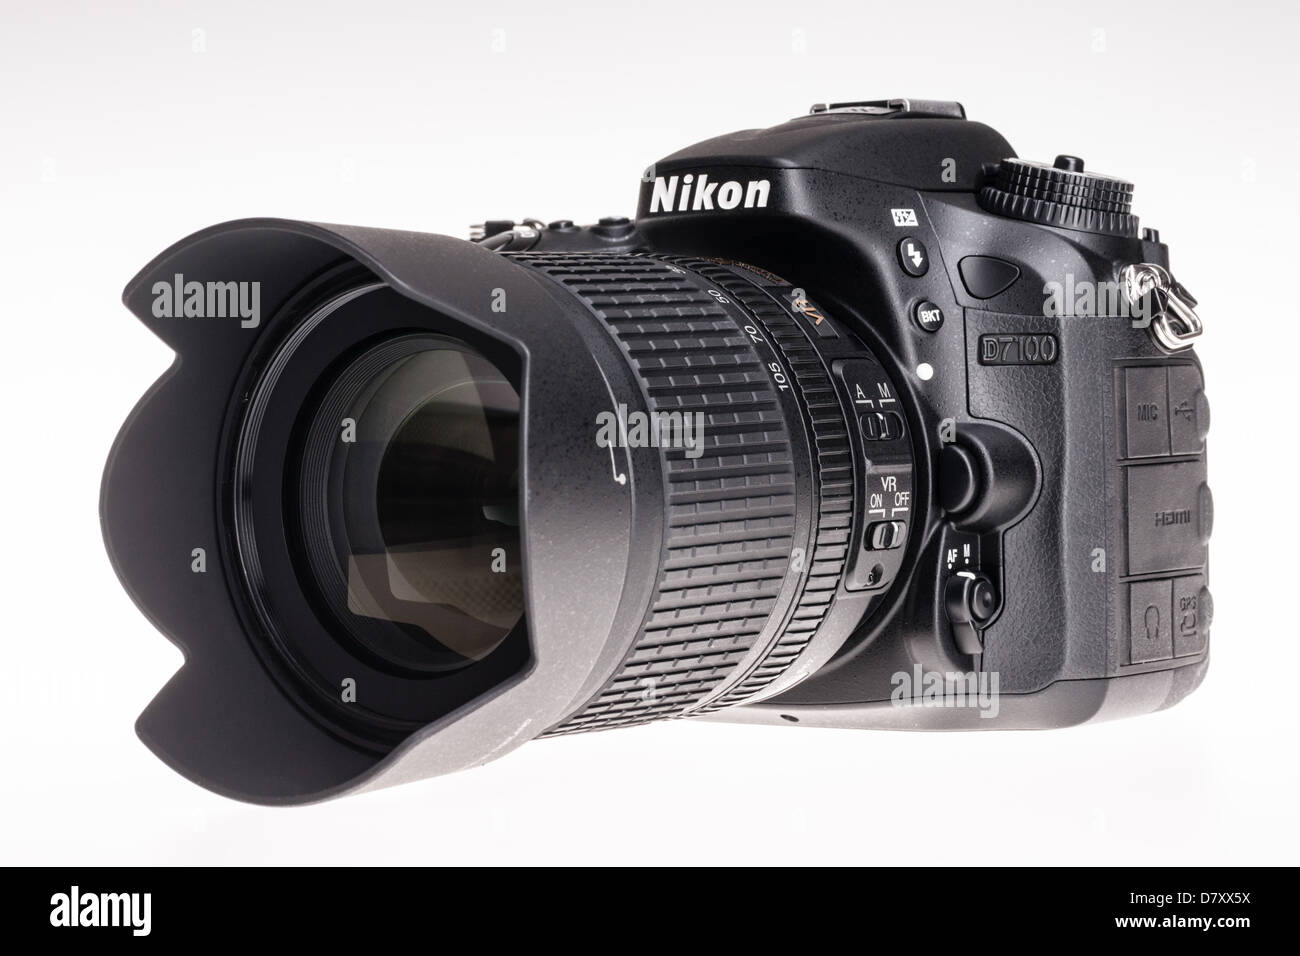 Nikon d7100 fotografías e imágenes de alta resolución - Alamy